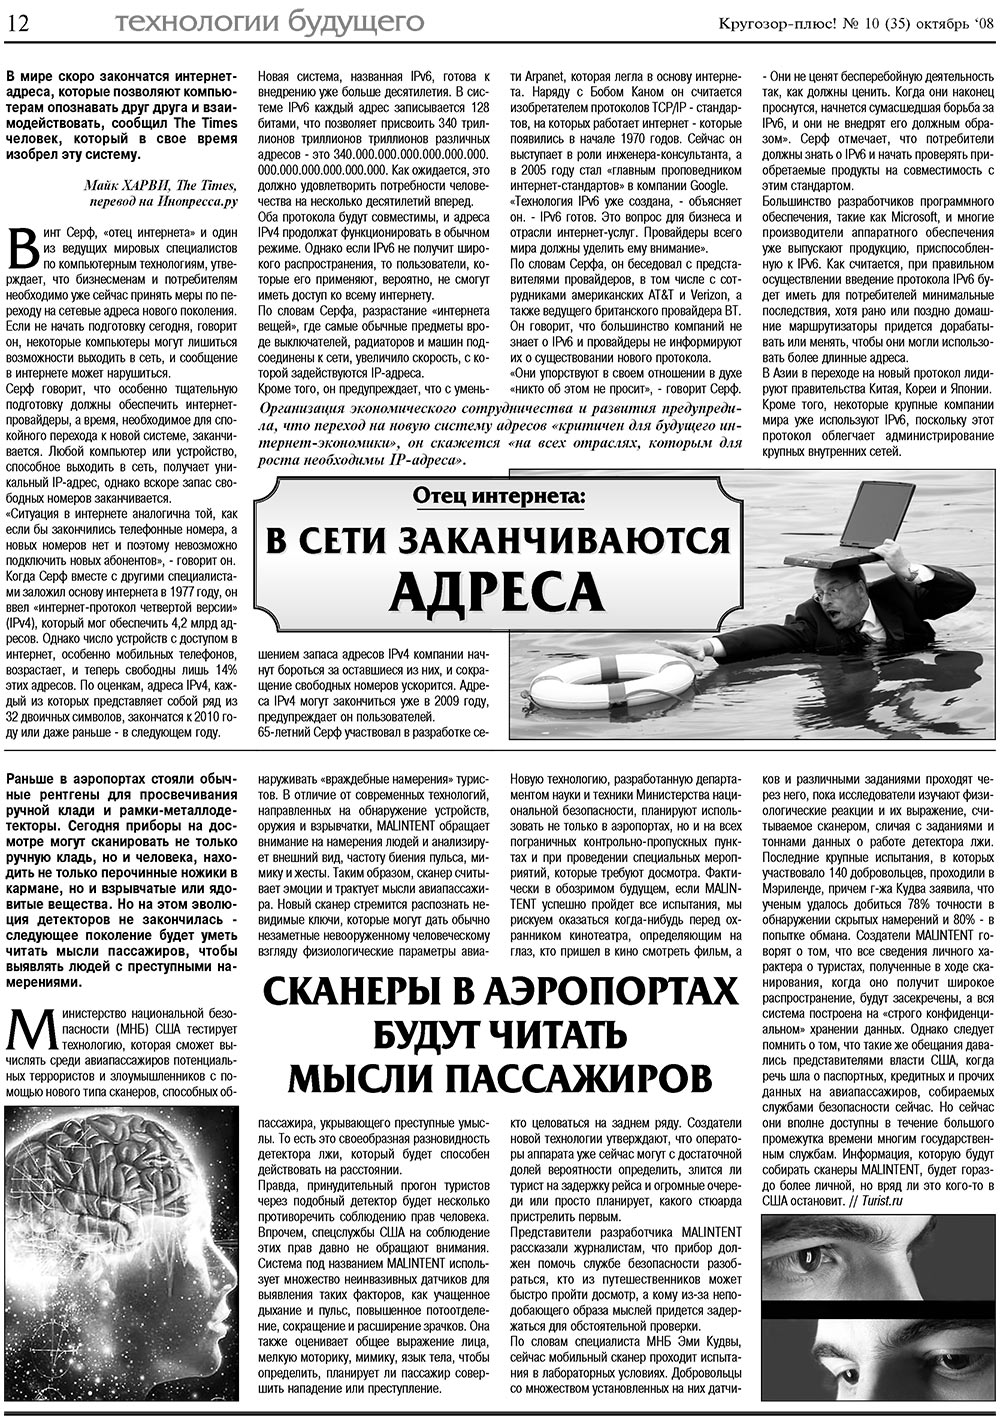 Кругозор плюс! (газета). 2008 год, номер 10, стр. 12